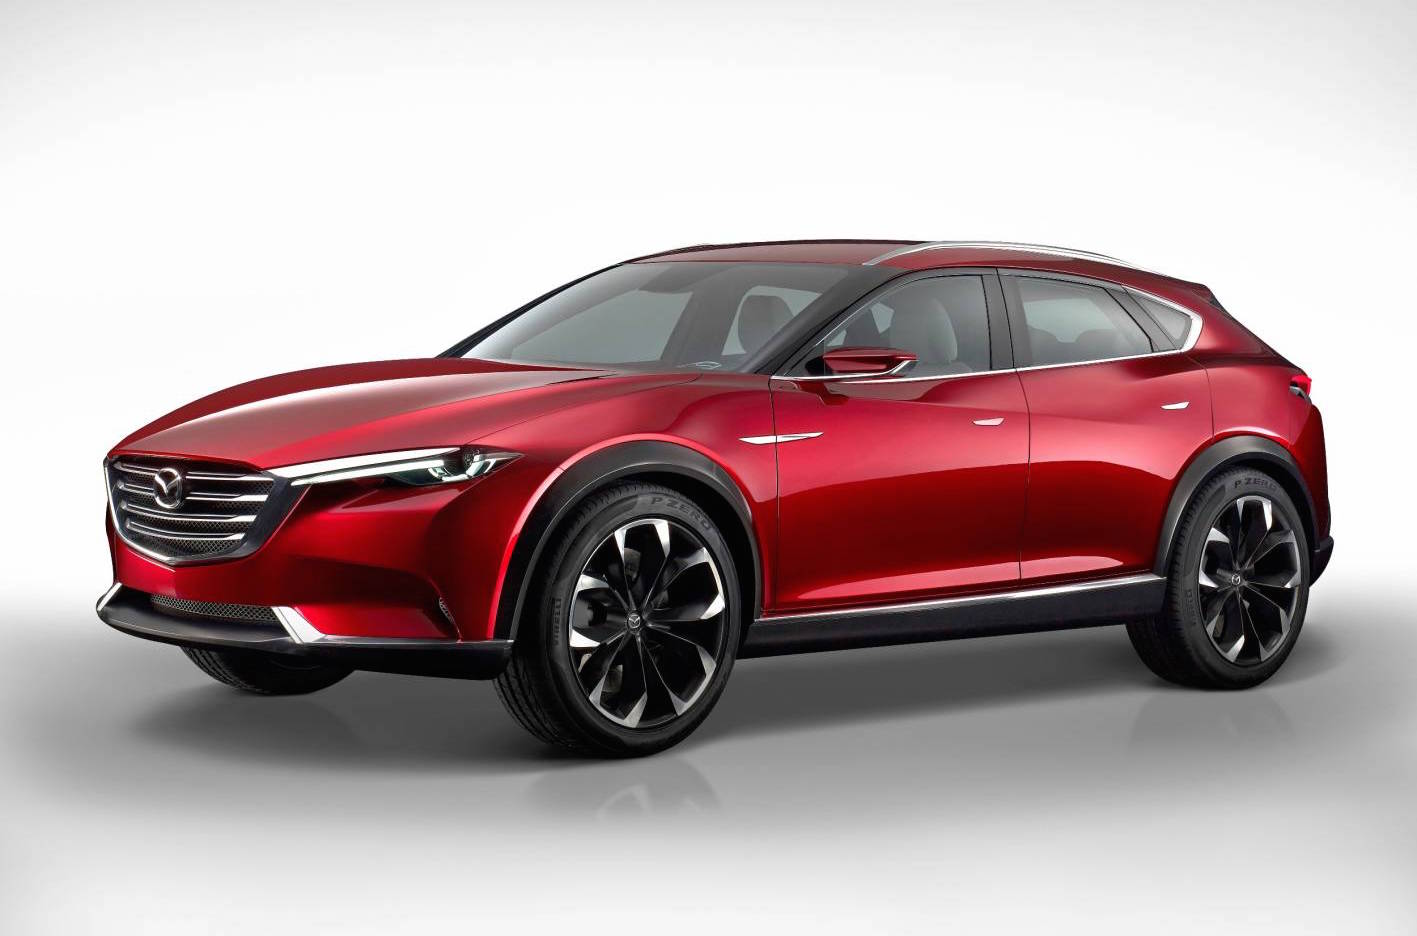 Mazda KOERU concept shows future CX5, CX9 design